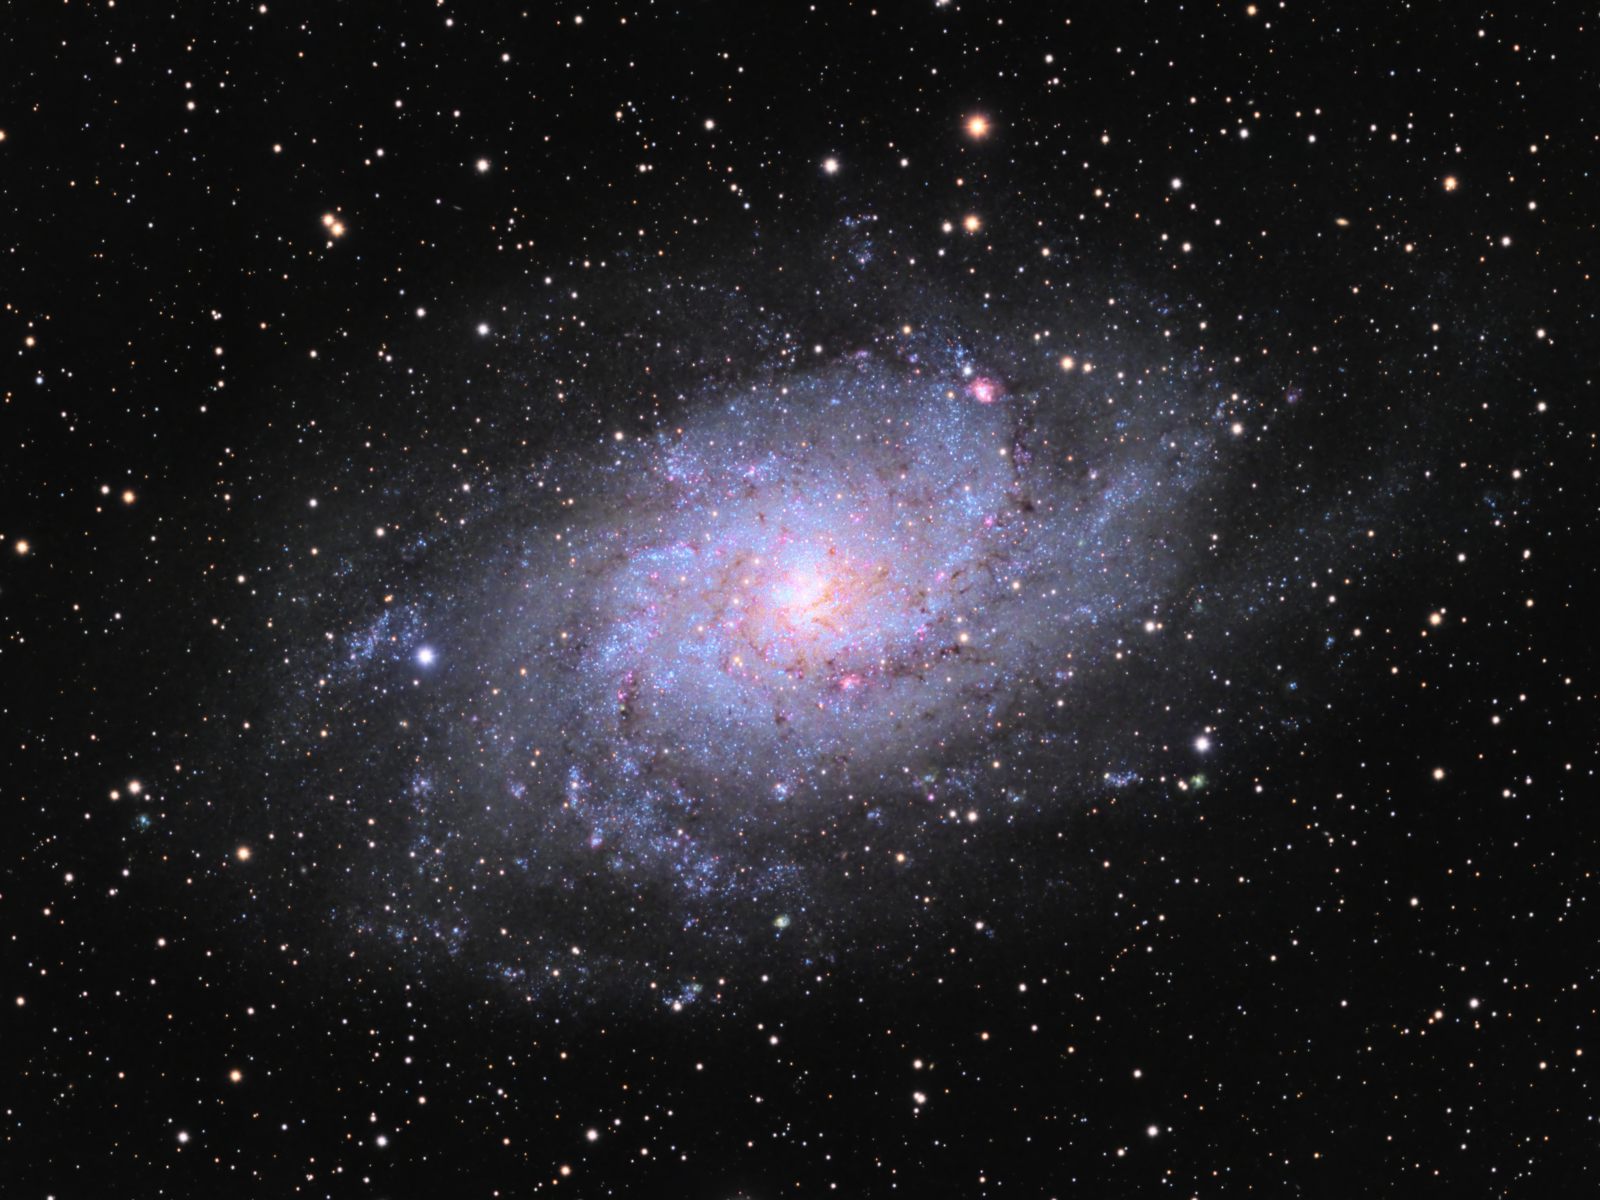 M33, The Triangulum Galaxy